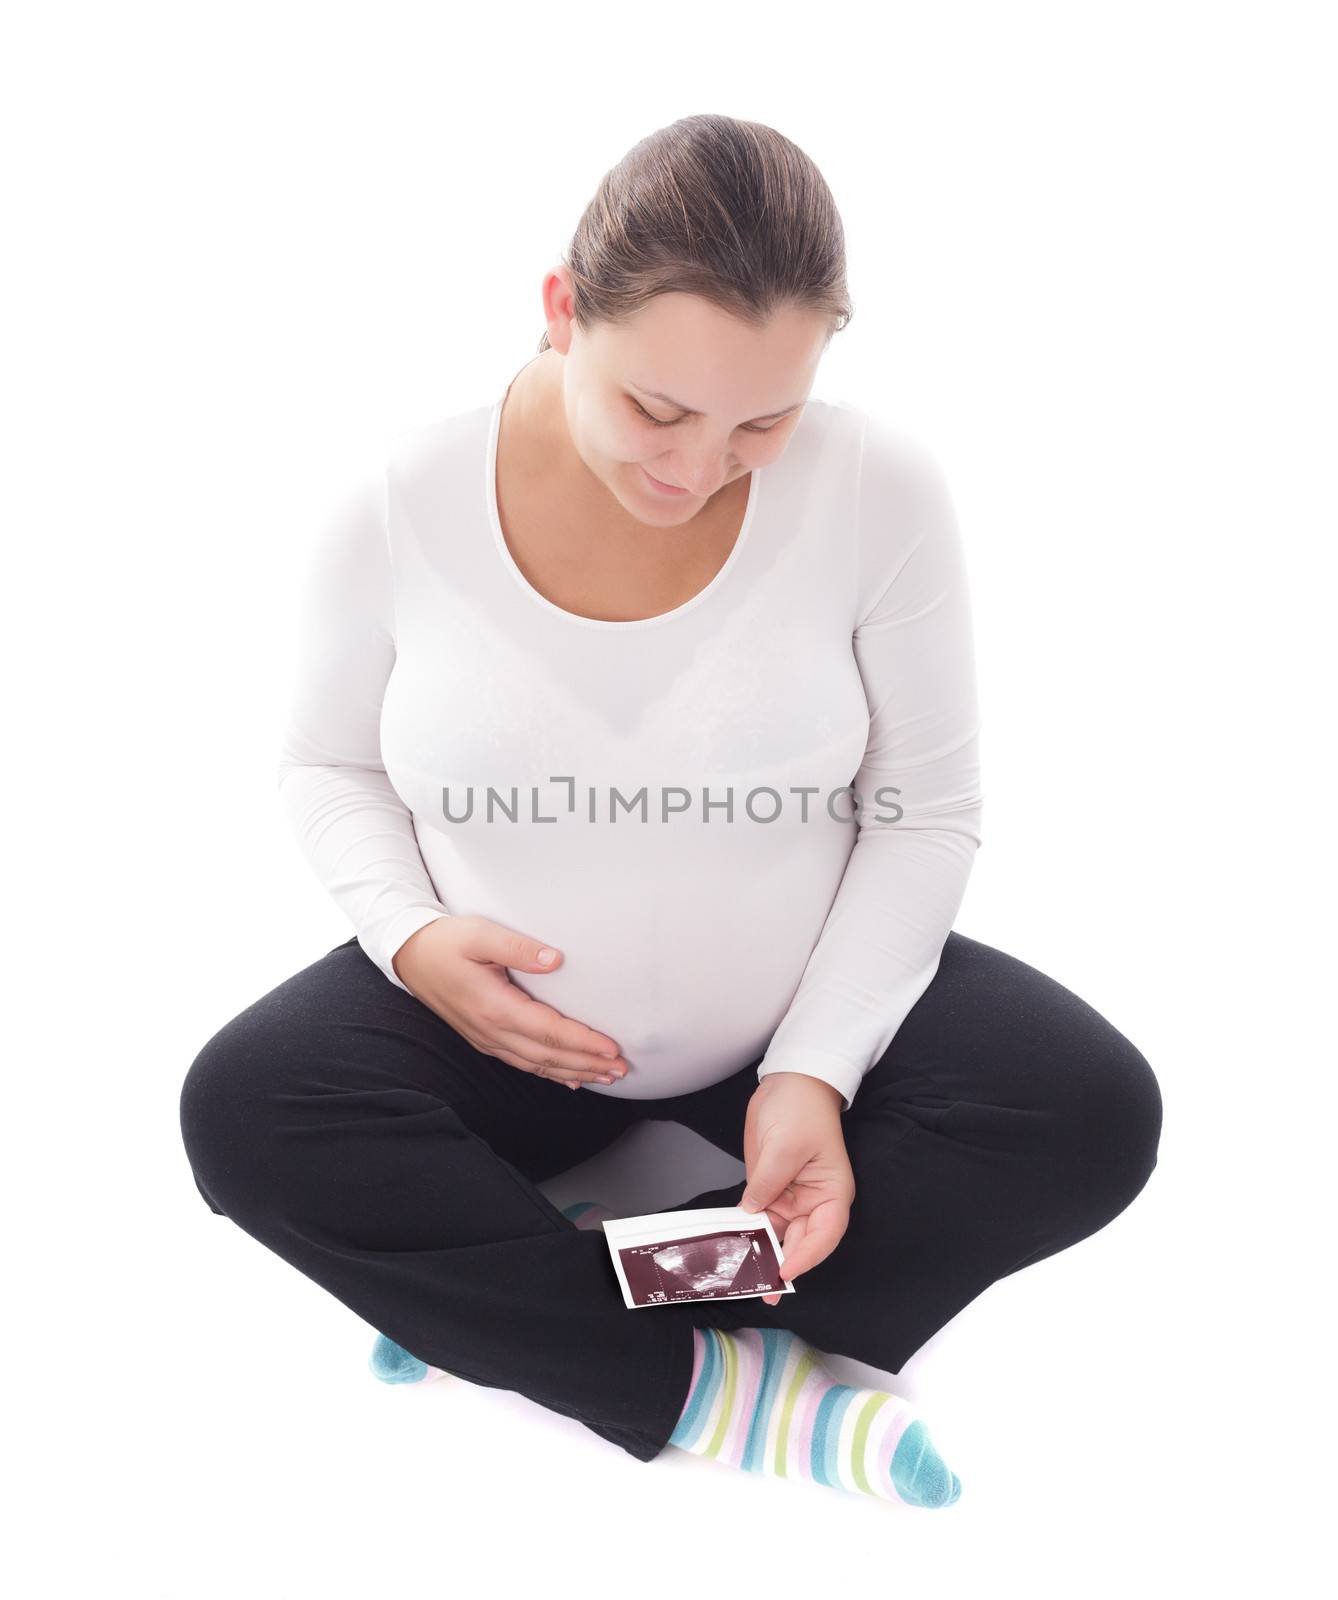 ultrasonics photo pregnancy by oksix